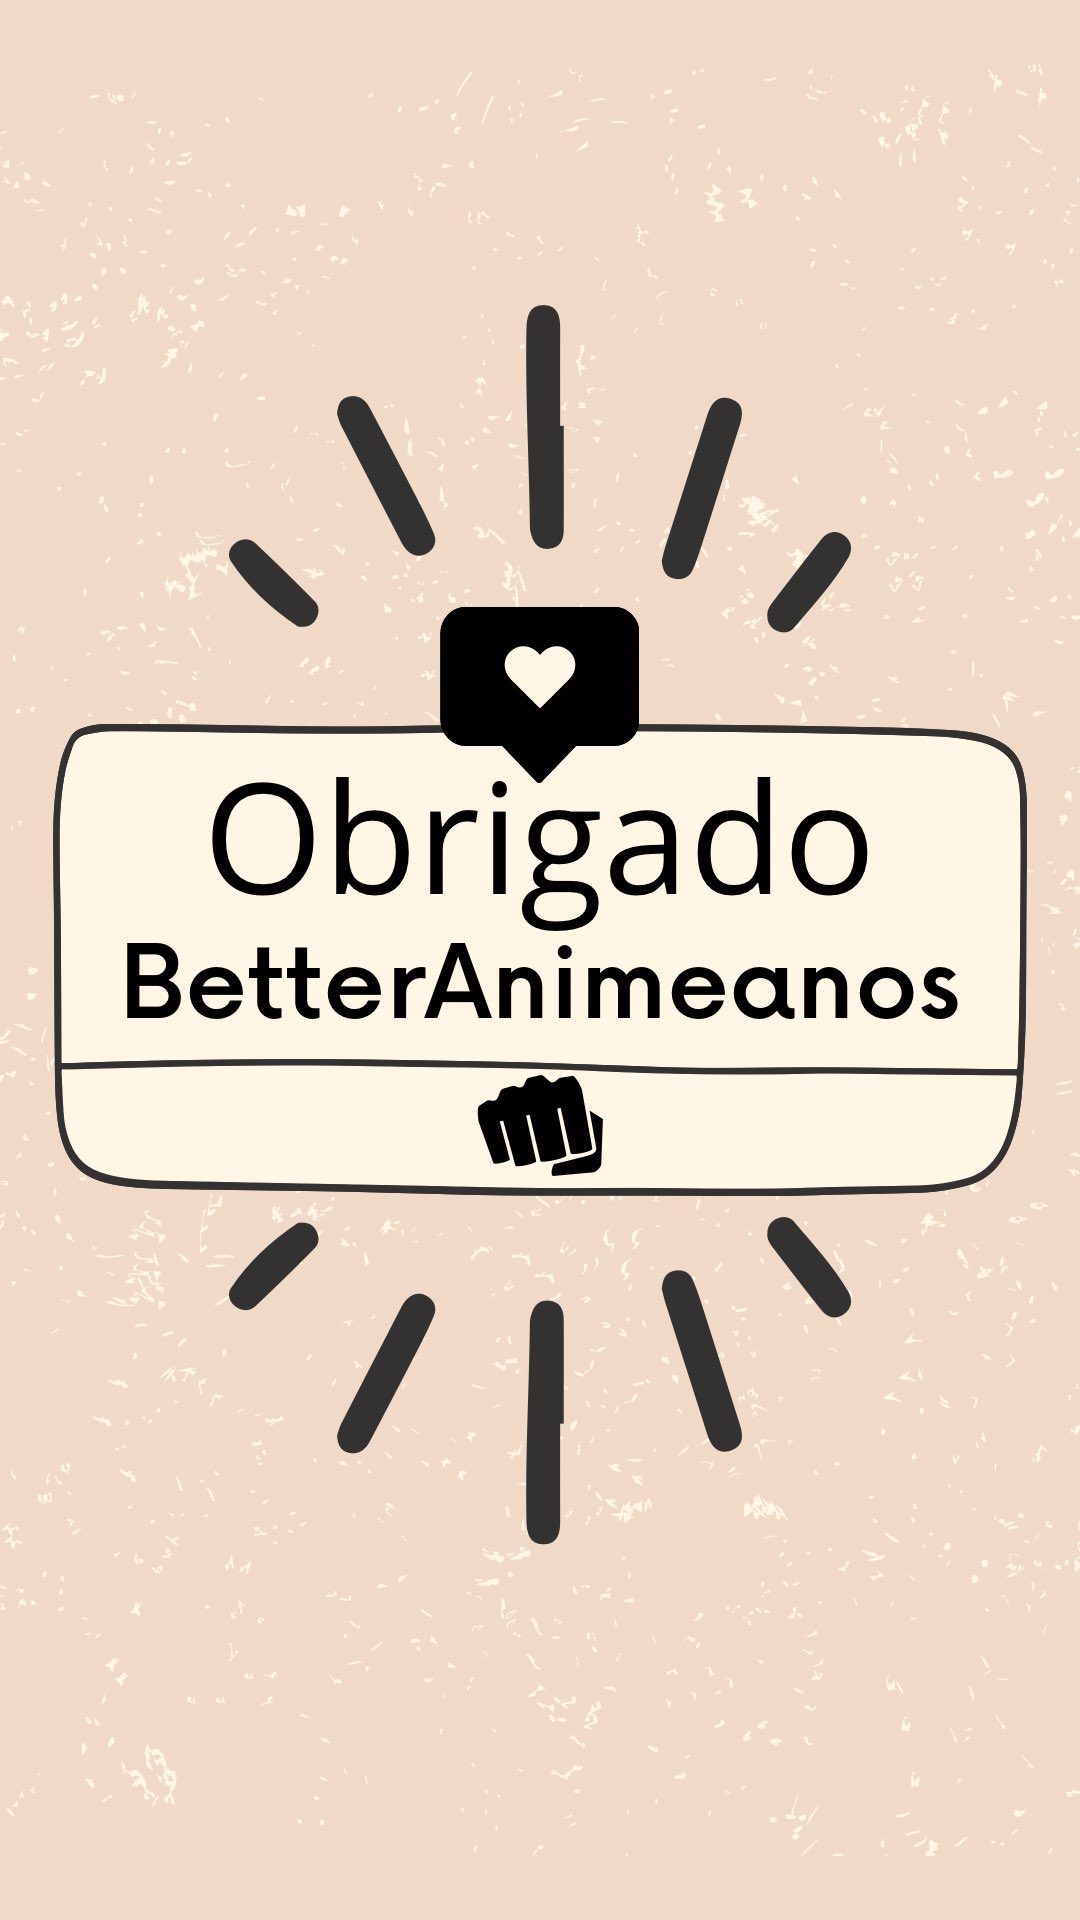 BETTER ANIME VOLTOU #anime #shorts #betteranime 